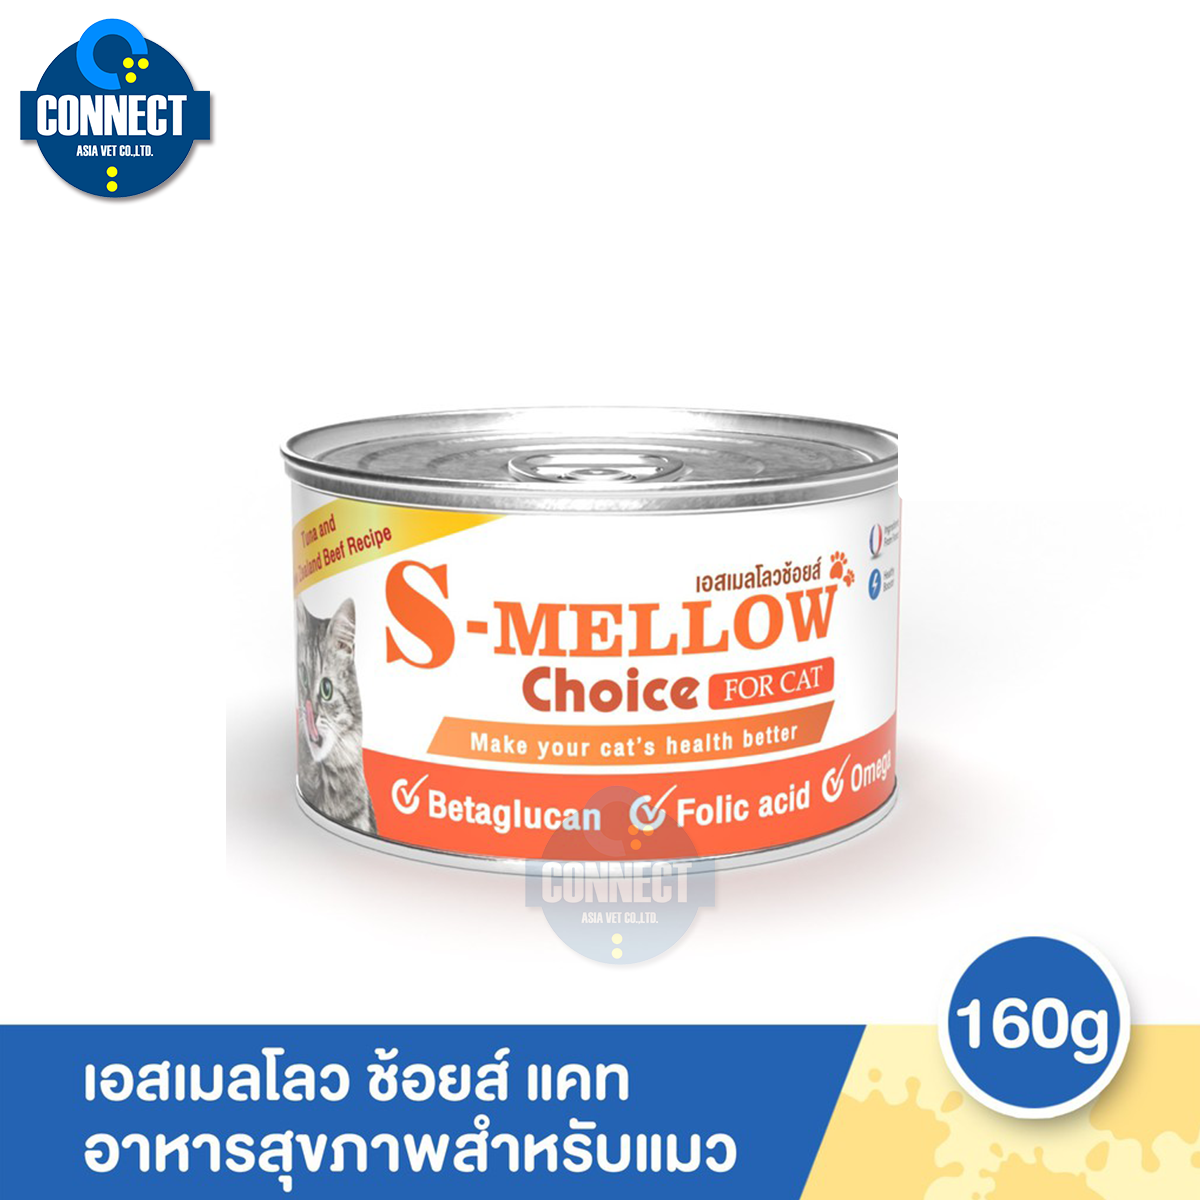 S-Mellow Choice For Cat อาหารสุขภาพสำหรับแมว 160g